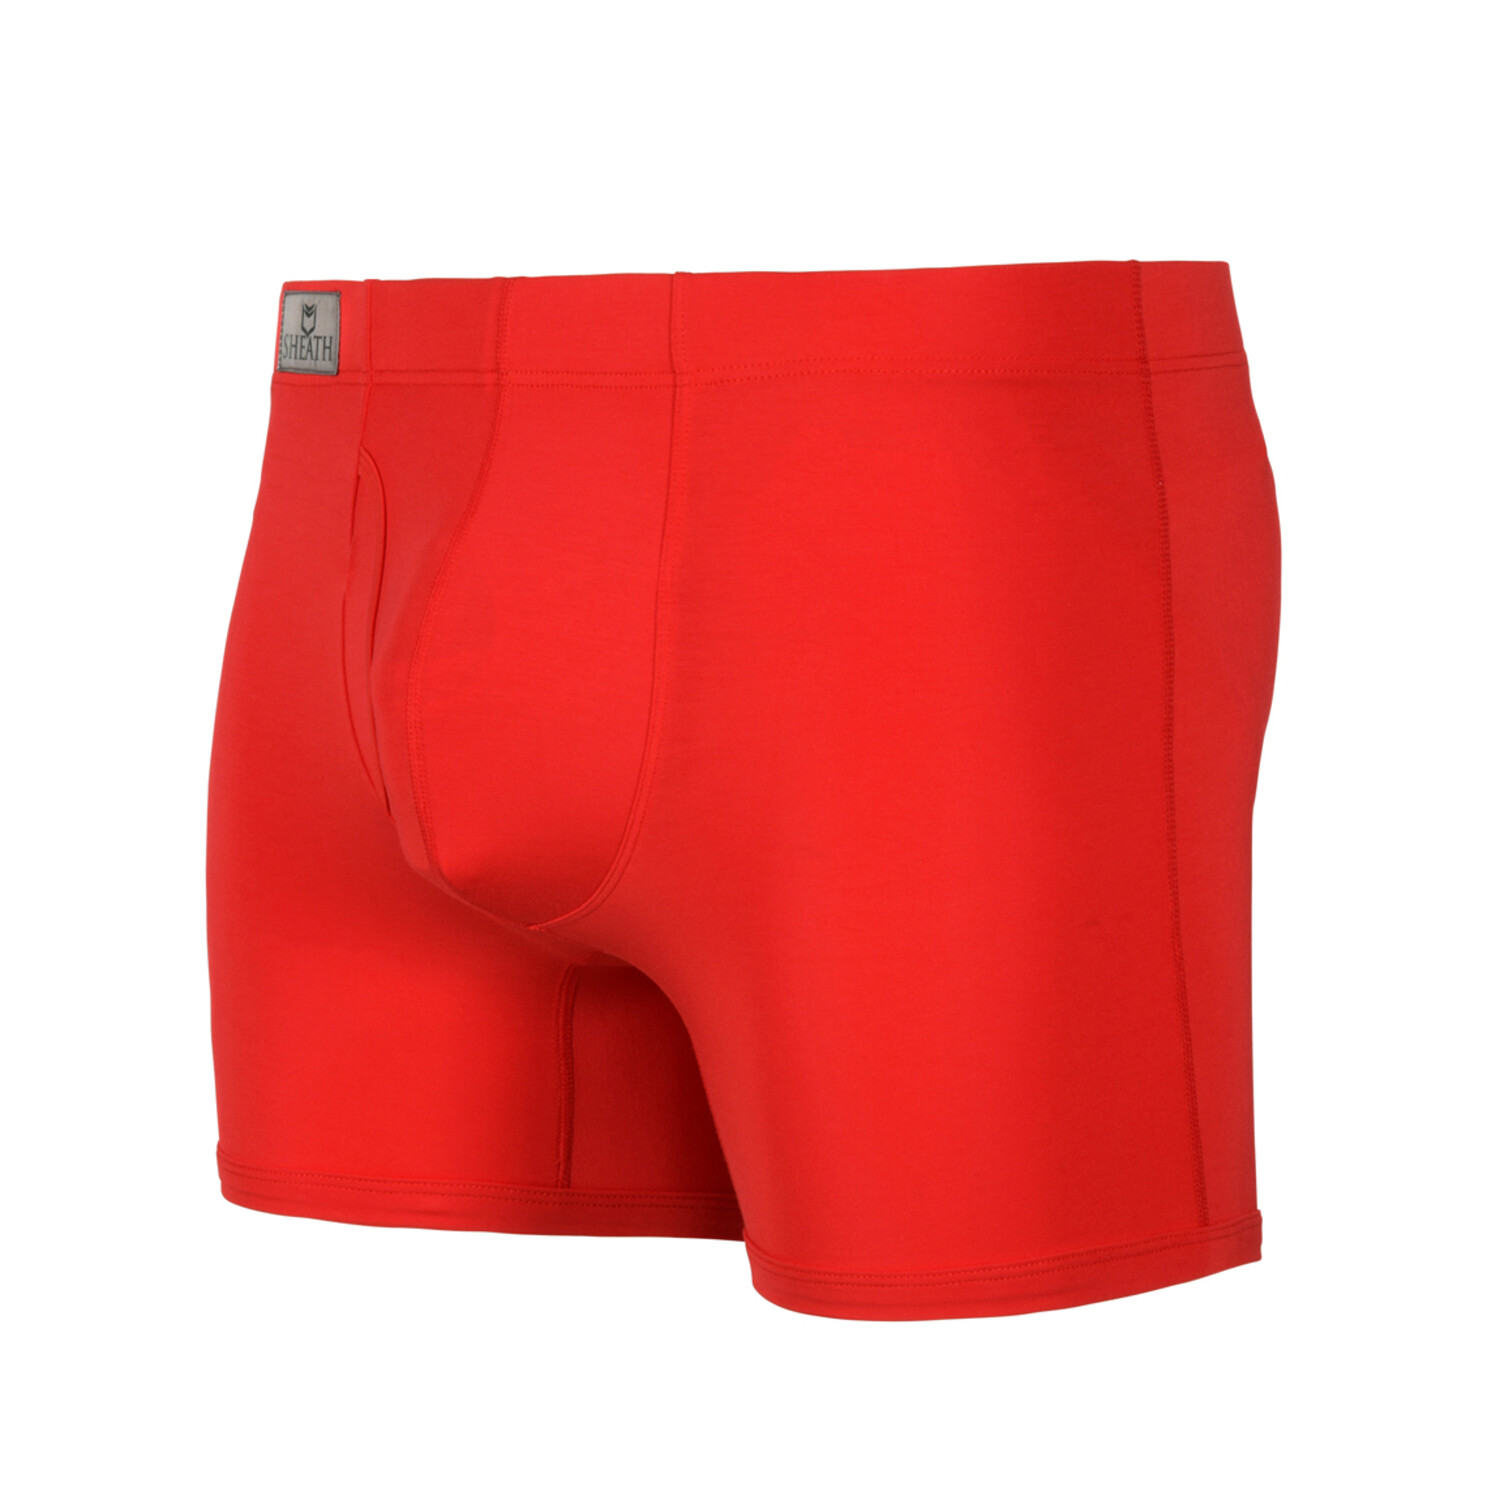 SHEATH 3.21 Men's Dual Pouch Boxer Brief // Red (Small) - Sheath Dual ...